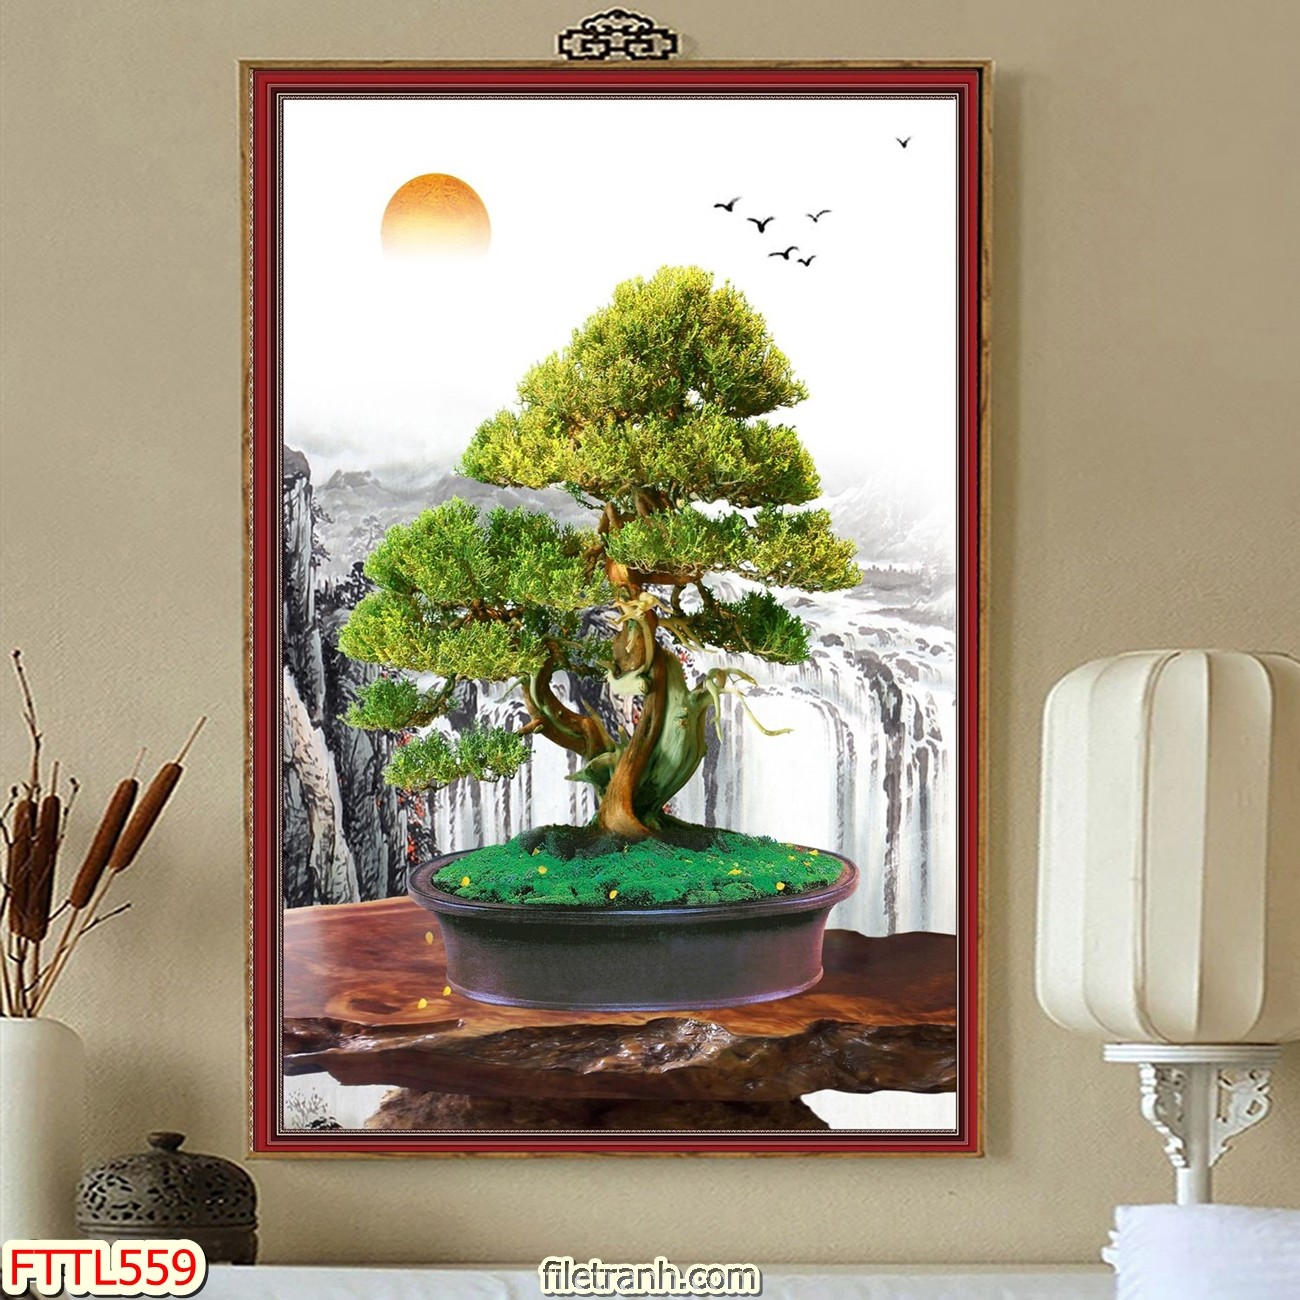 https://filetranh.com/file-tranh-chau-mai-bonsai/file-tranh-chau-mai-bonsai-fttl559.html